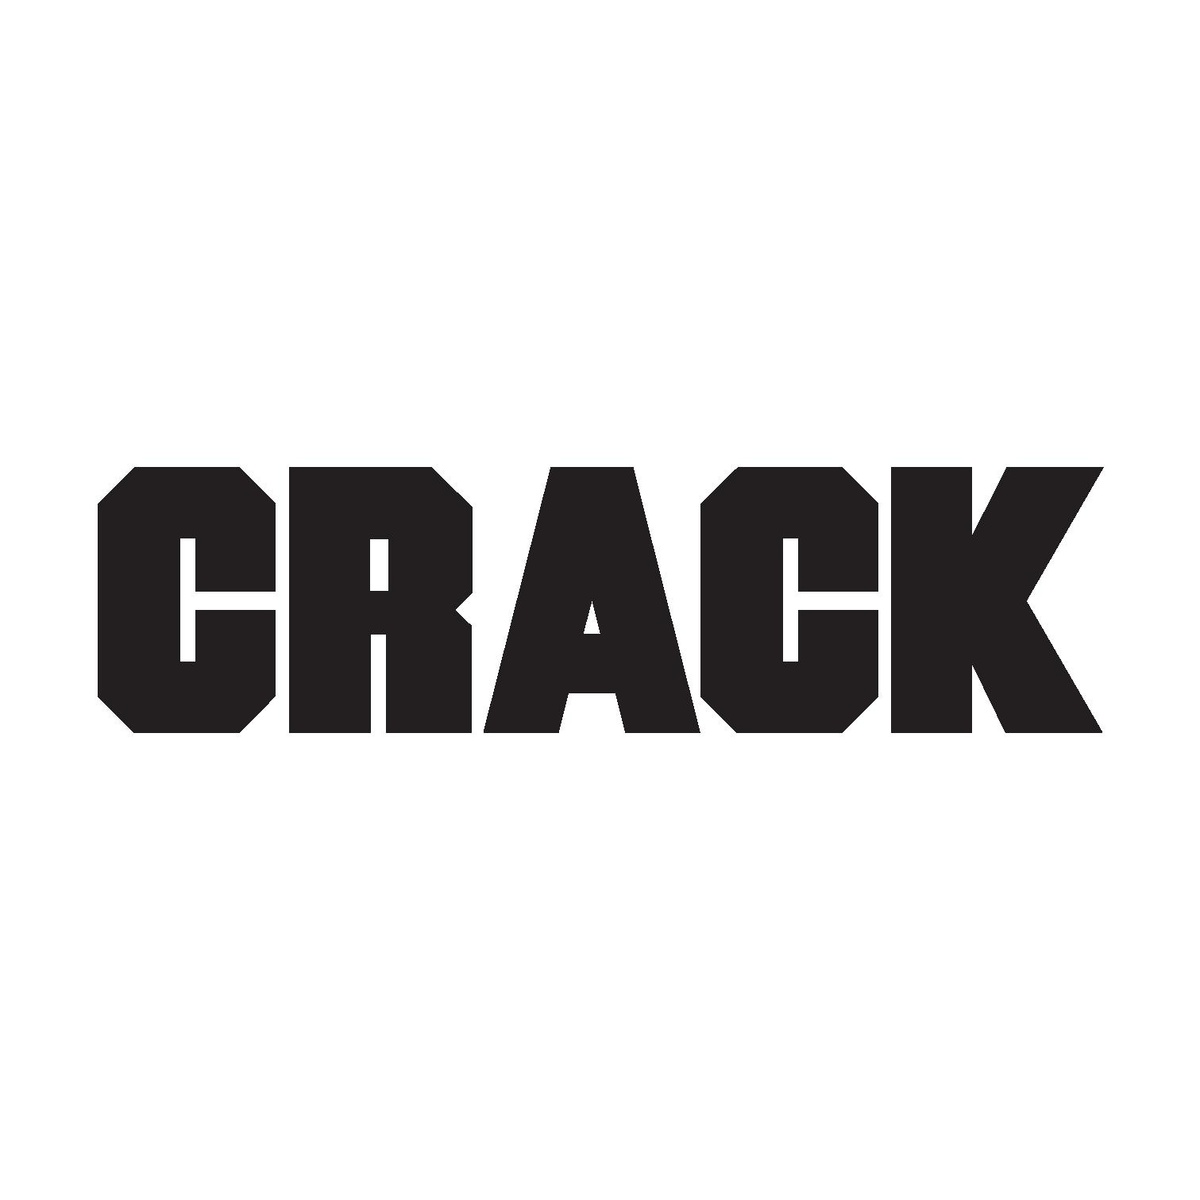 Nitro pdf crack free download